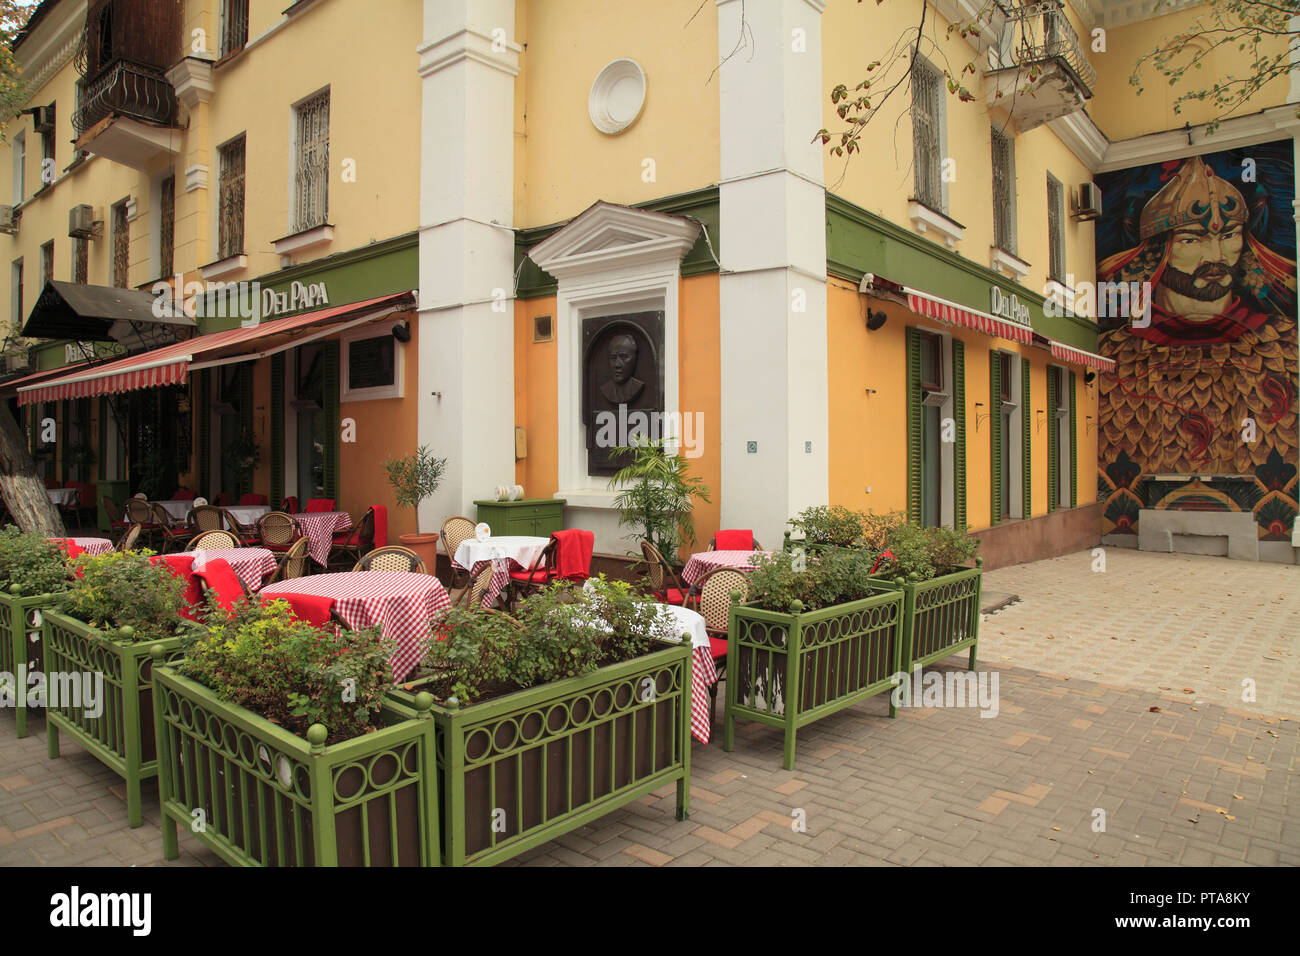 Kazakhstan; Almaty, restaurant terrace, street scene, Stock Photo